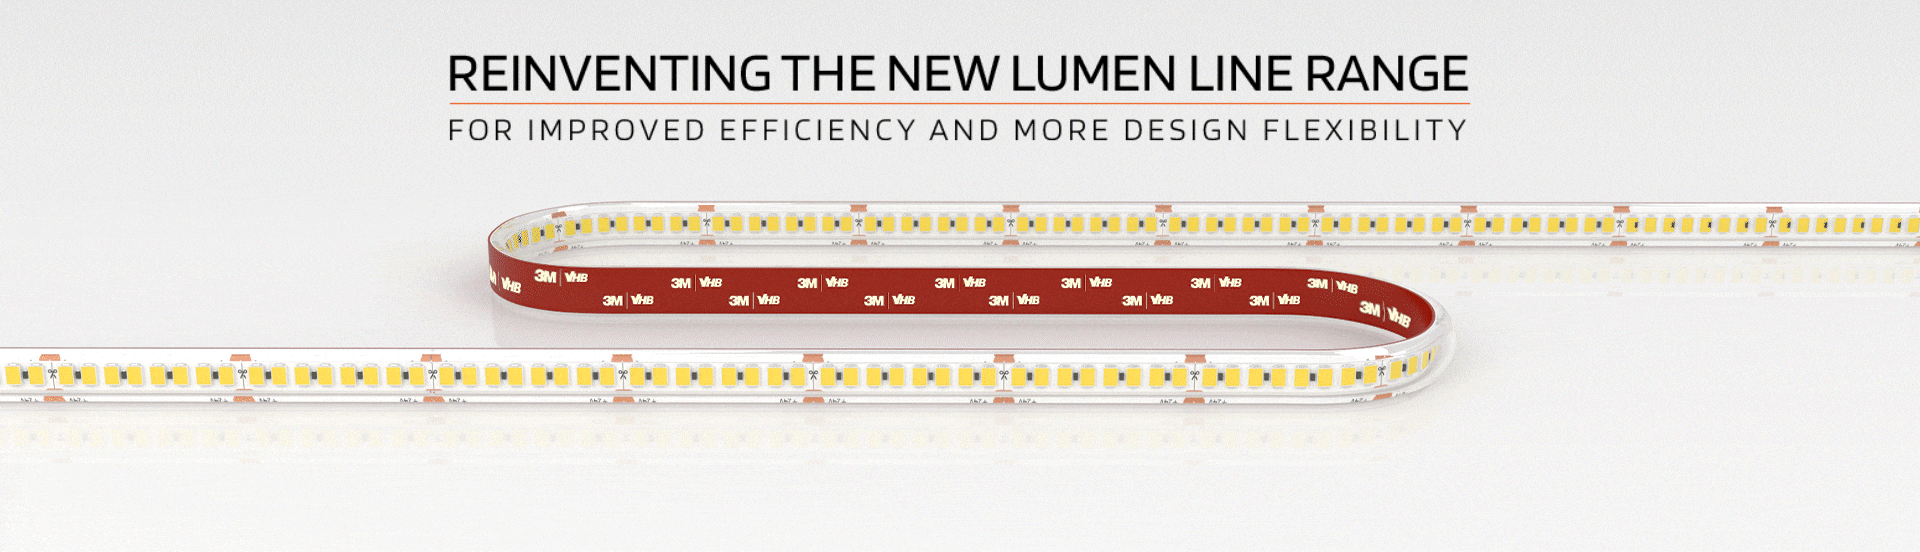 Reinventing the Lumen Line